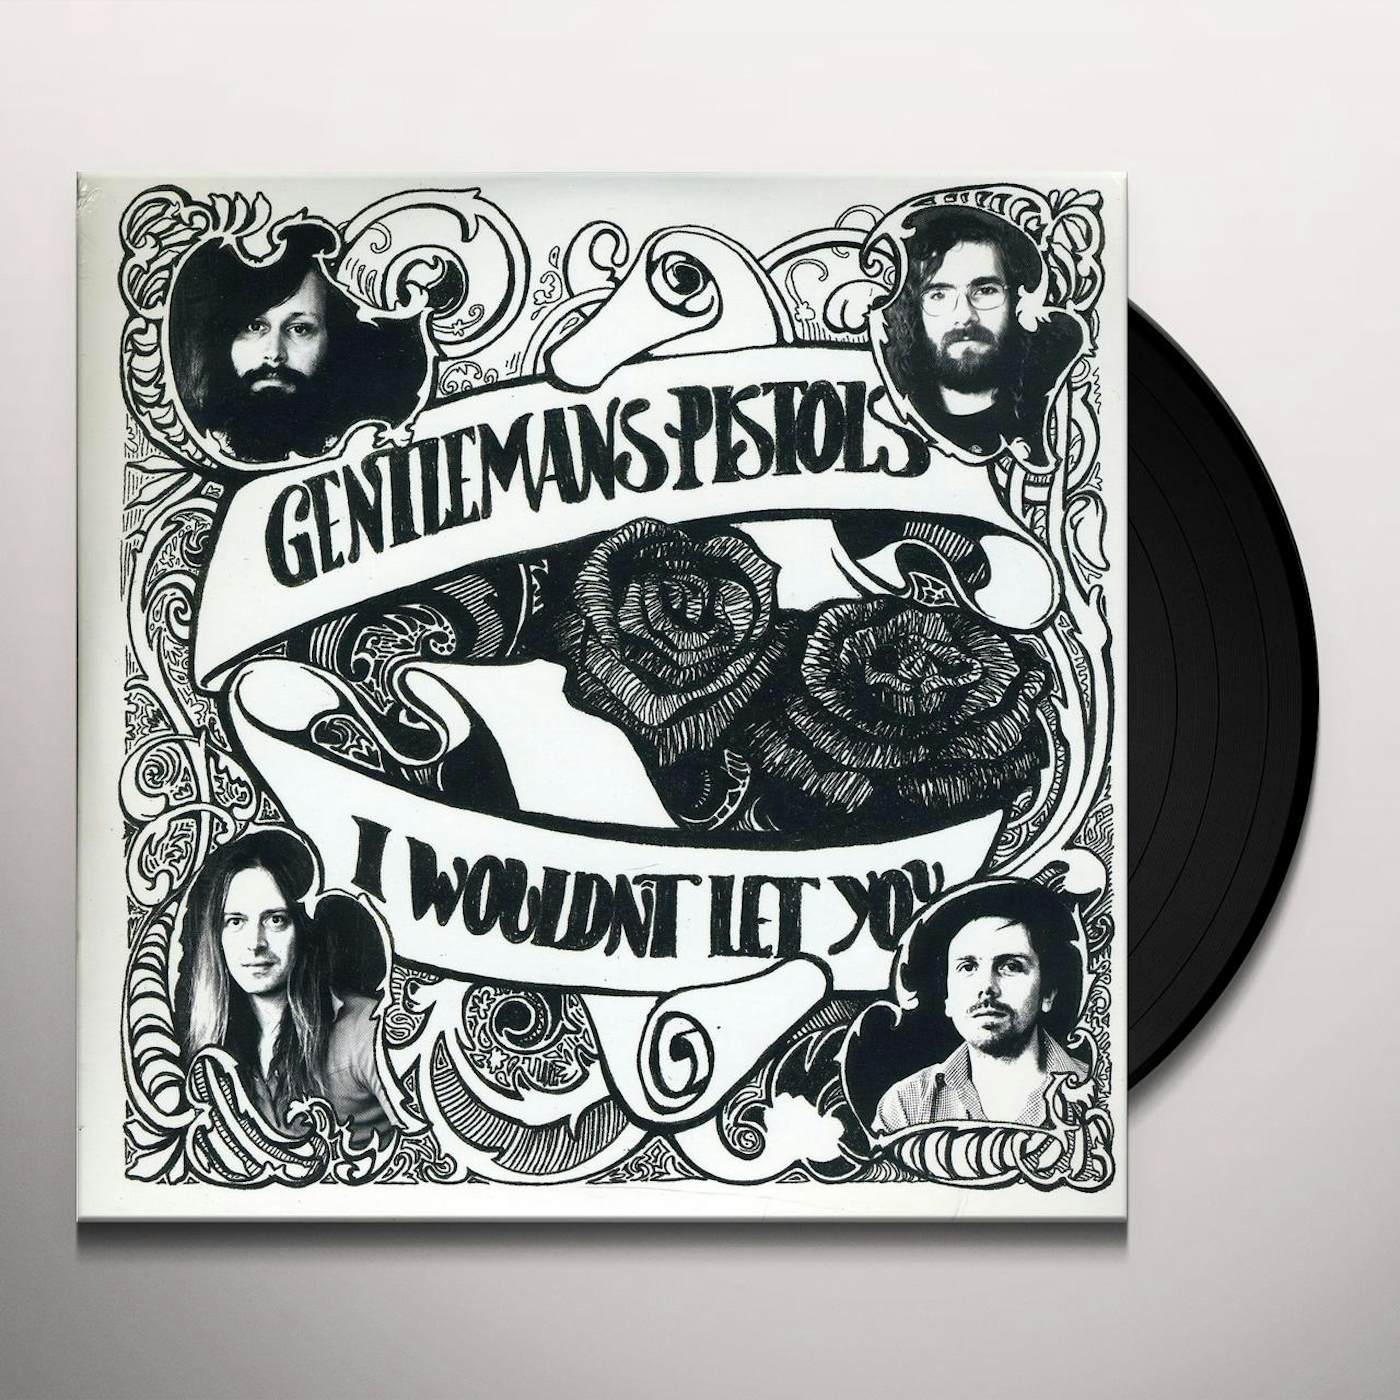 Gentleman's Pistols I Wouldn't Let You Vinyl Record